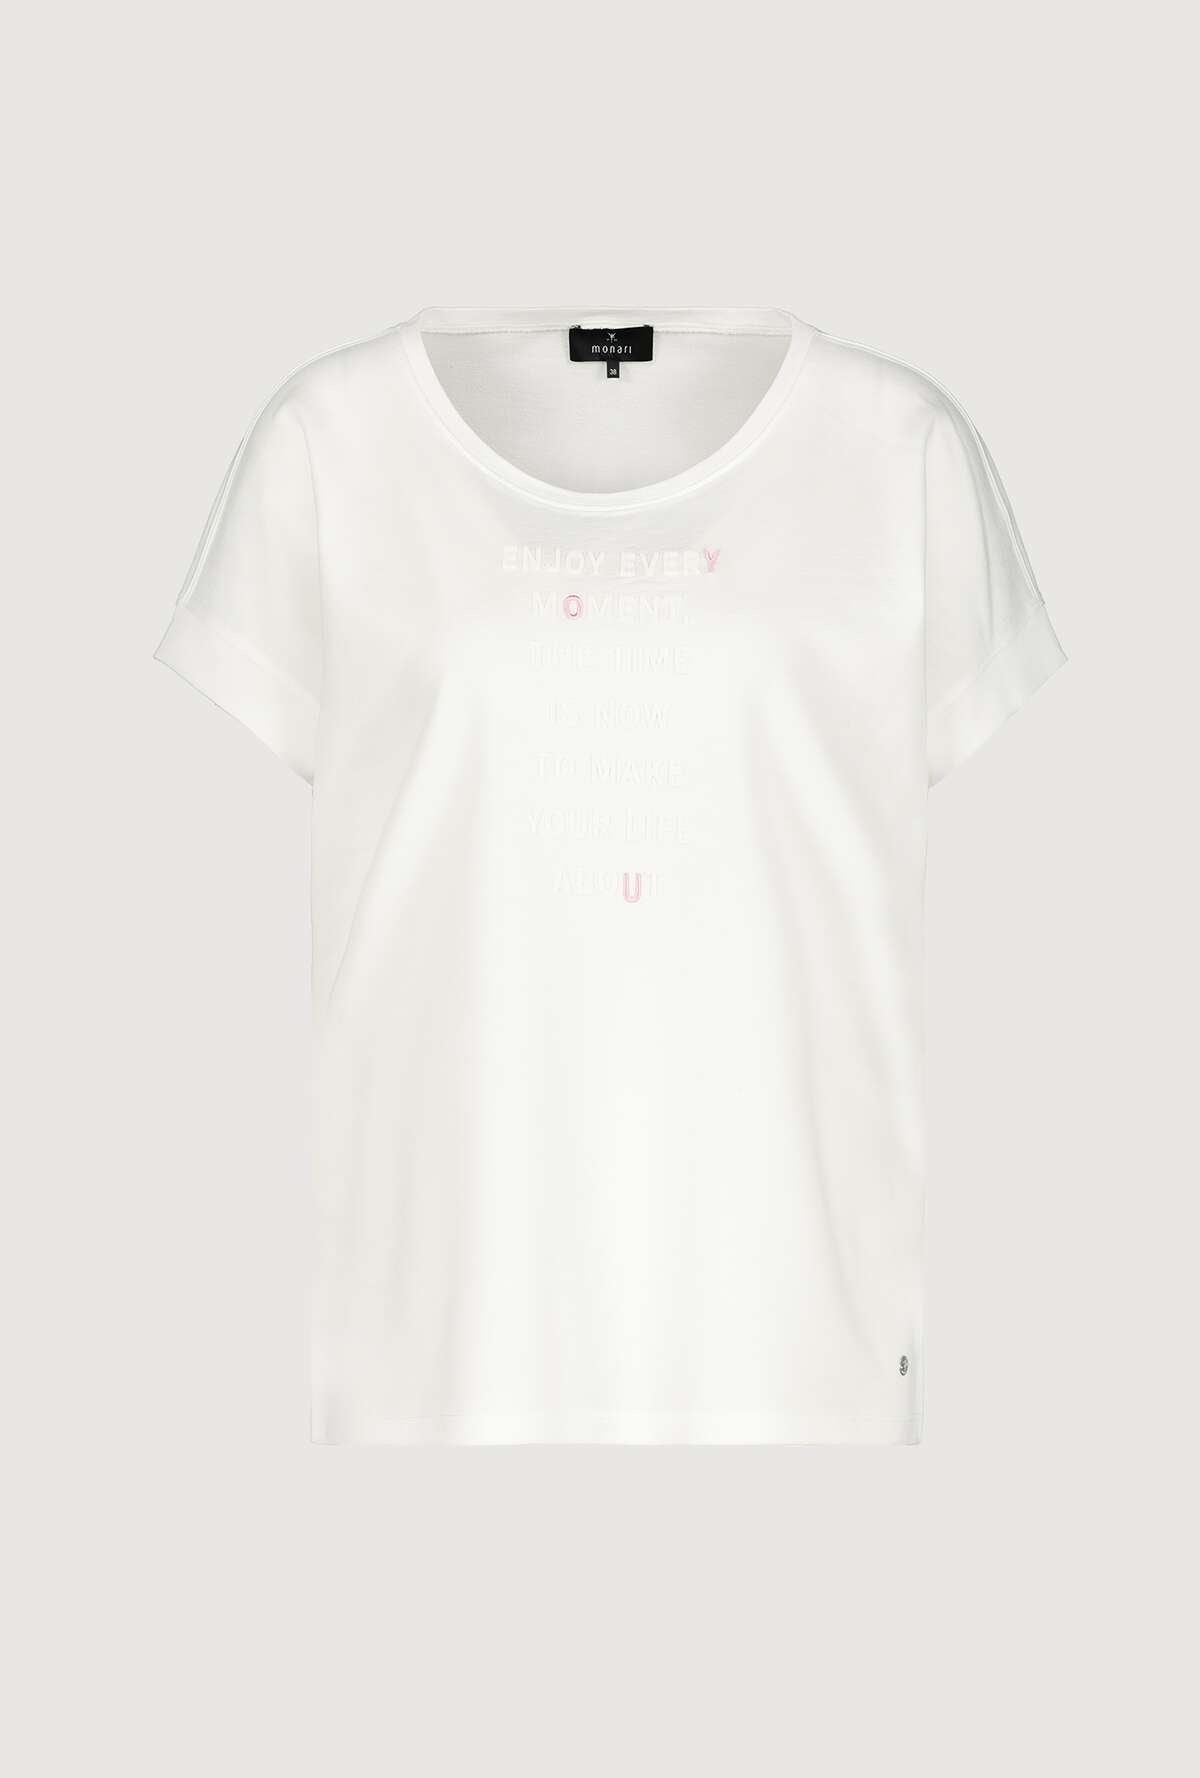 Shop Jump Into Spring T-Shirt | White - Monari